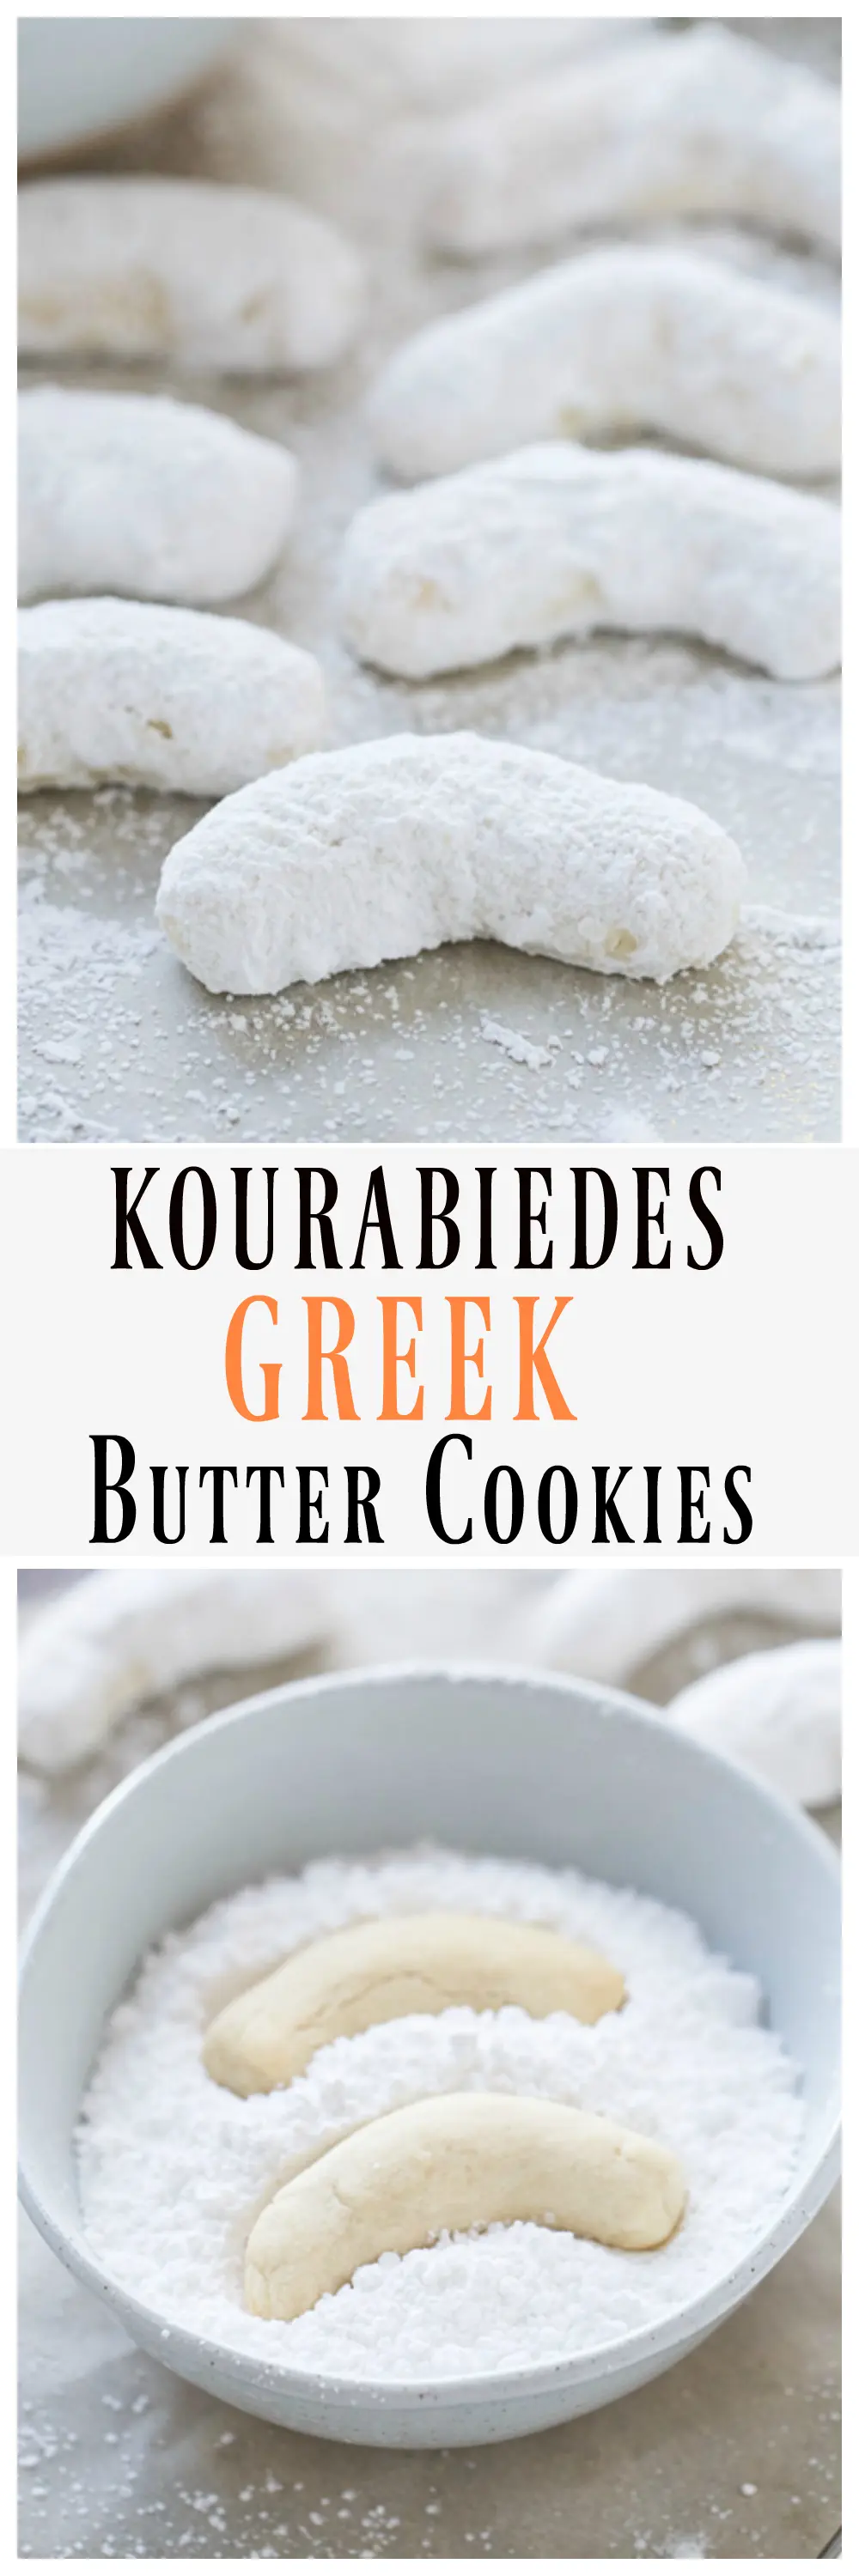 Kourabiedes (Greek Butter Cookies)